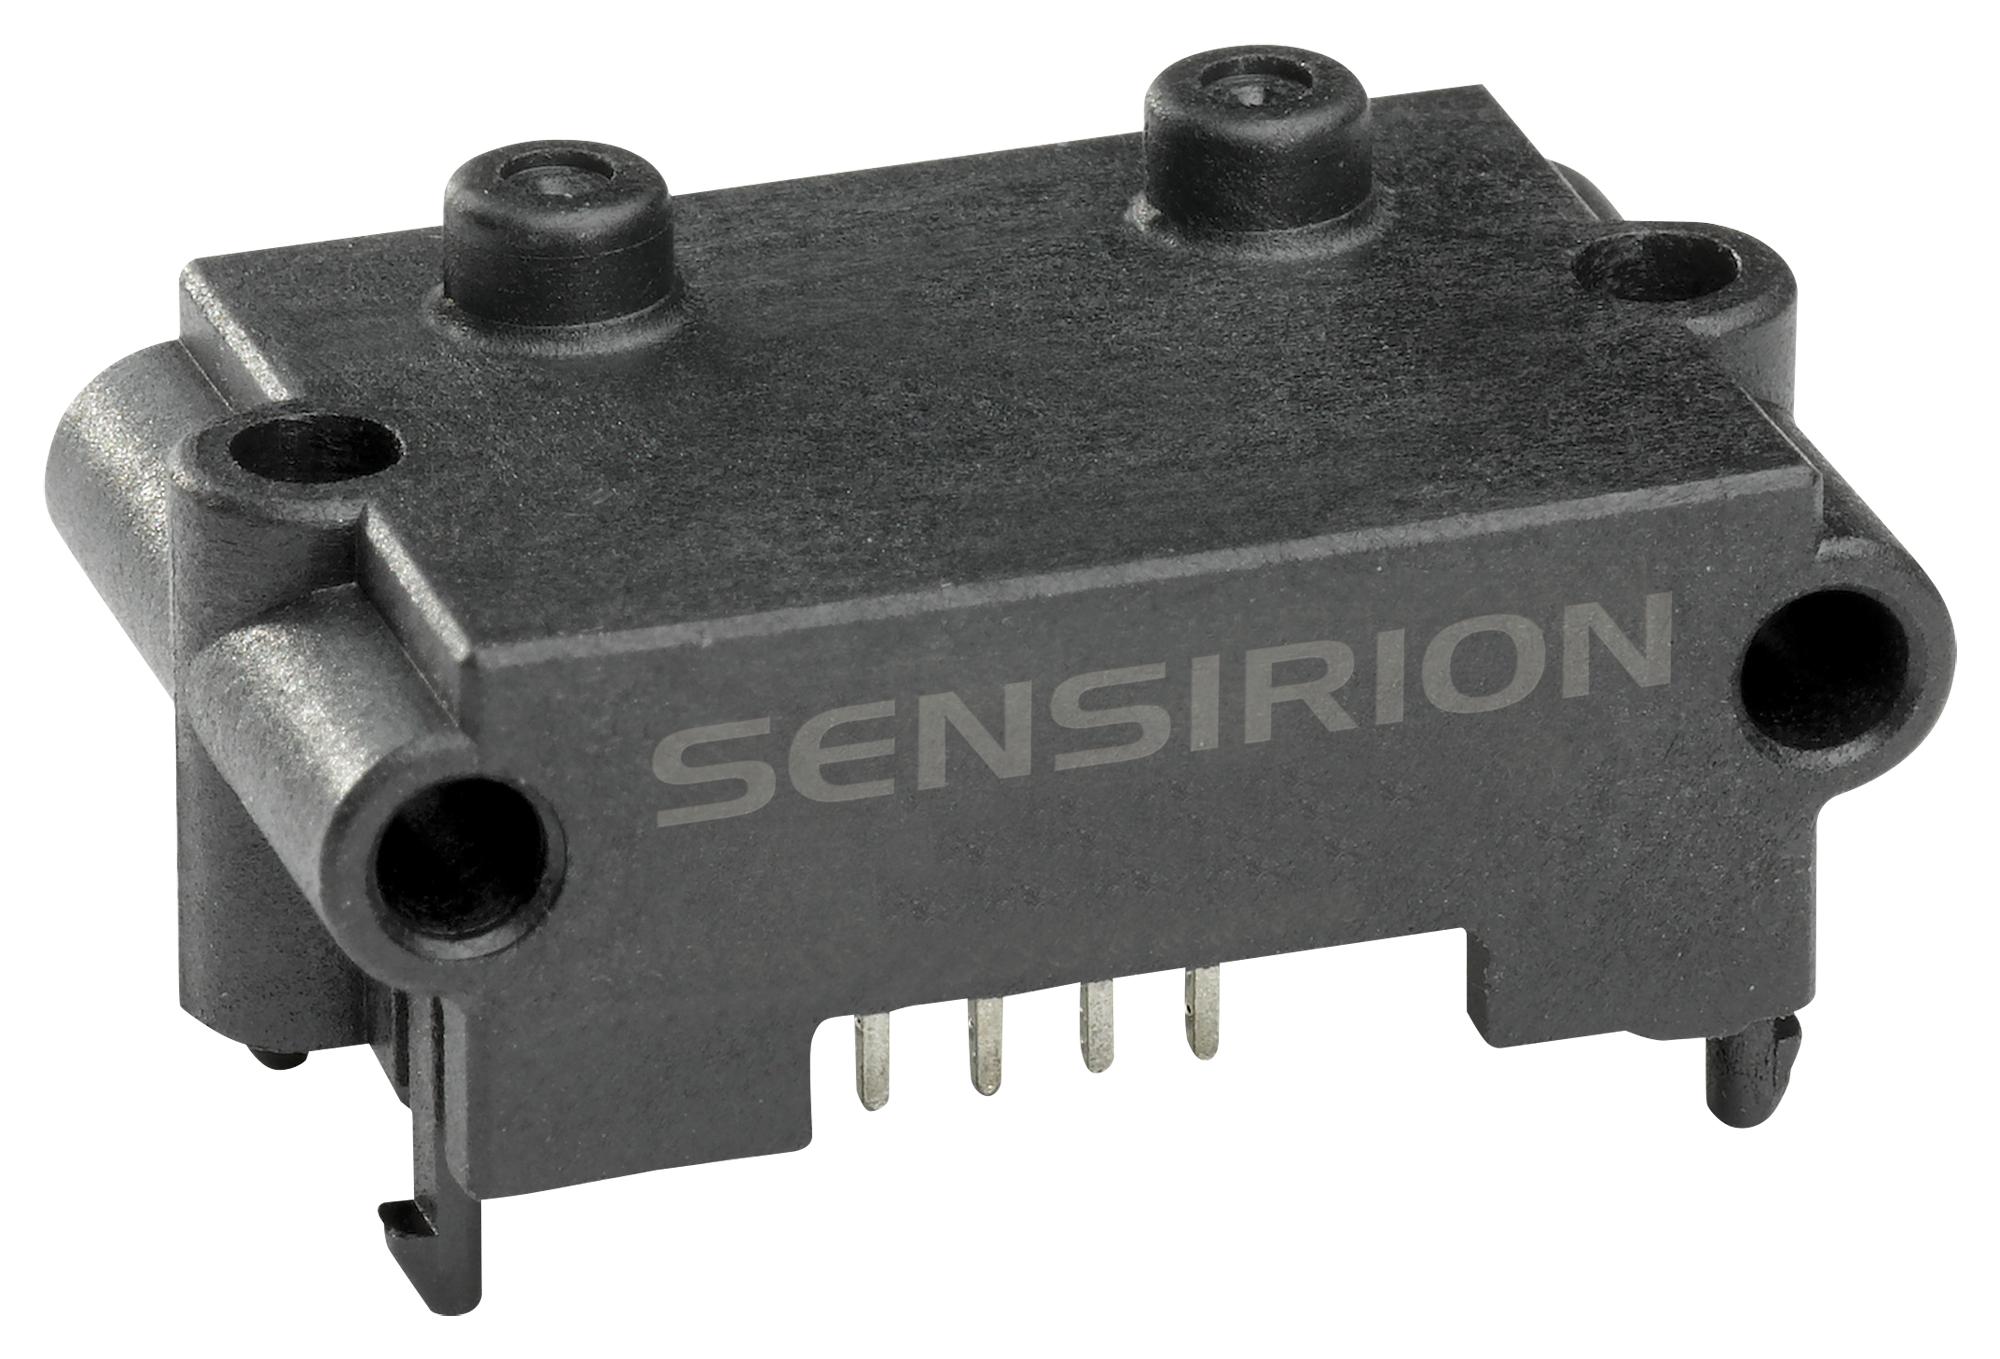 SDP800-500PA PRESSURE SENSOR, DIGITAL, 500PA, 5.5V SENSIRION